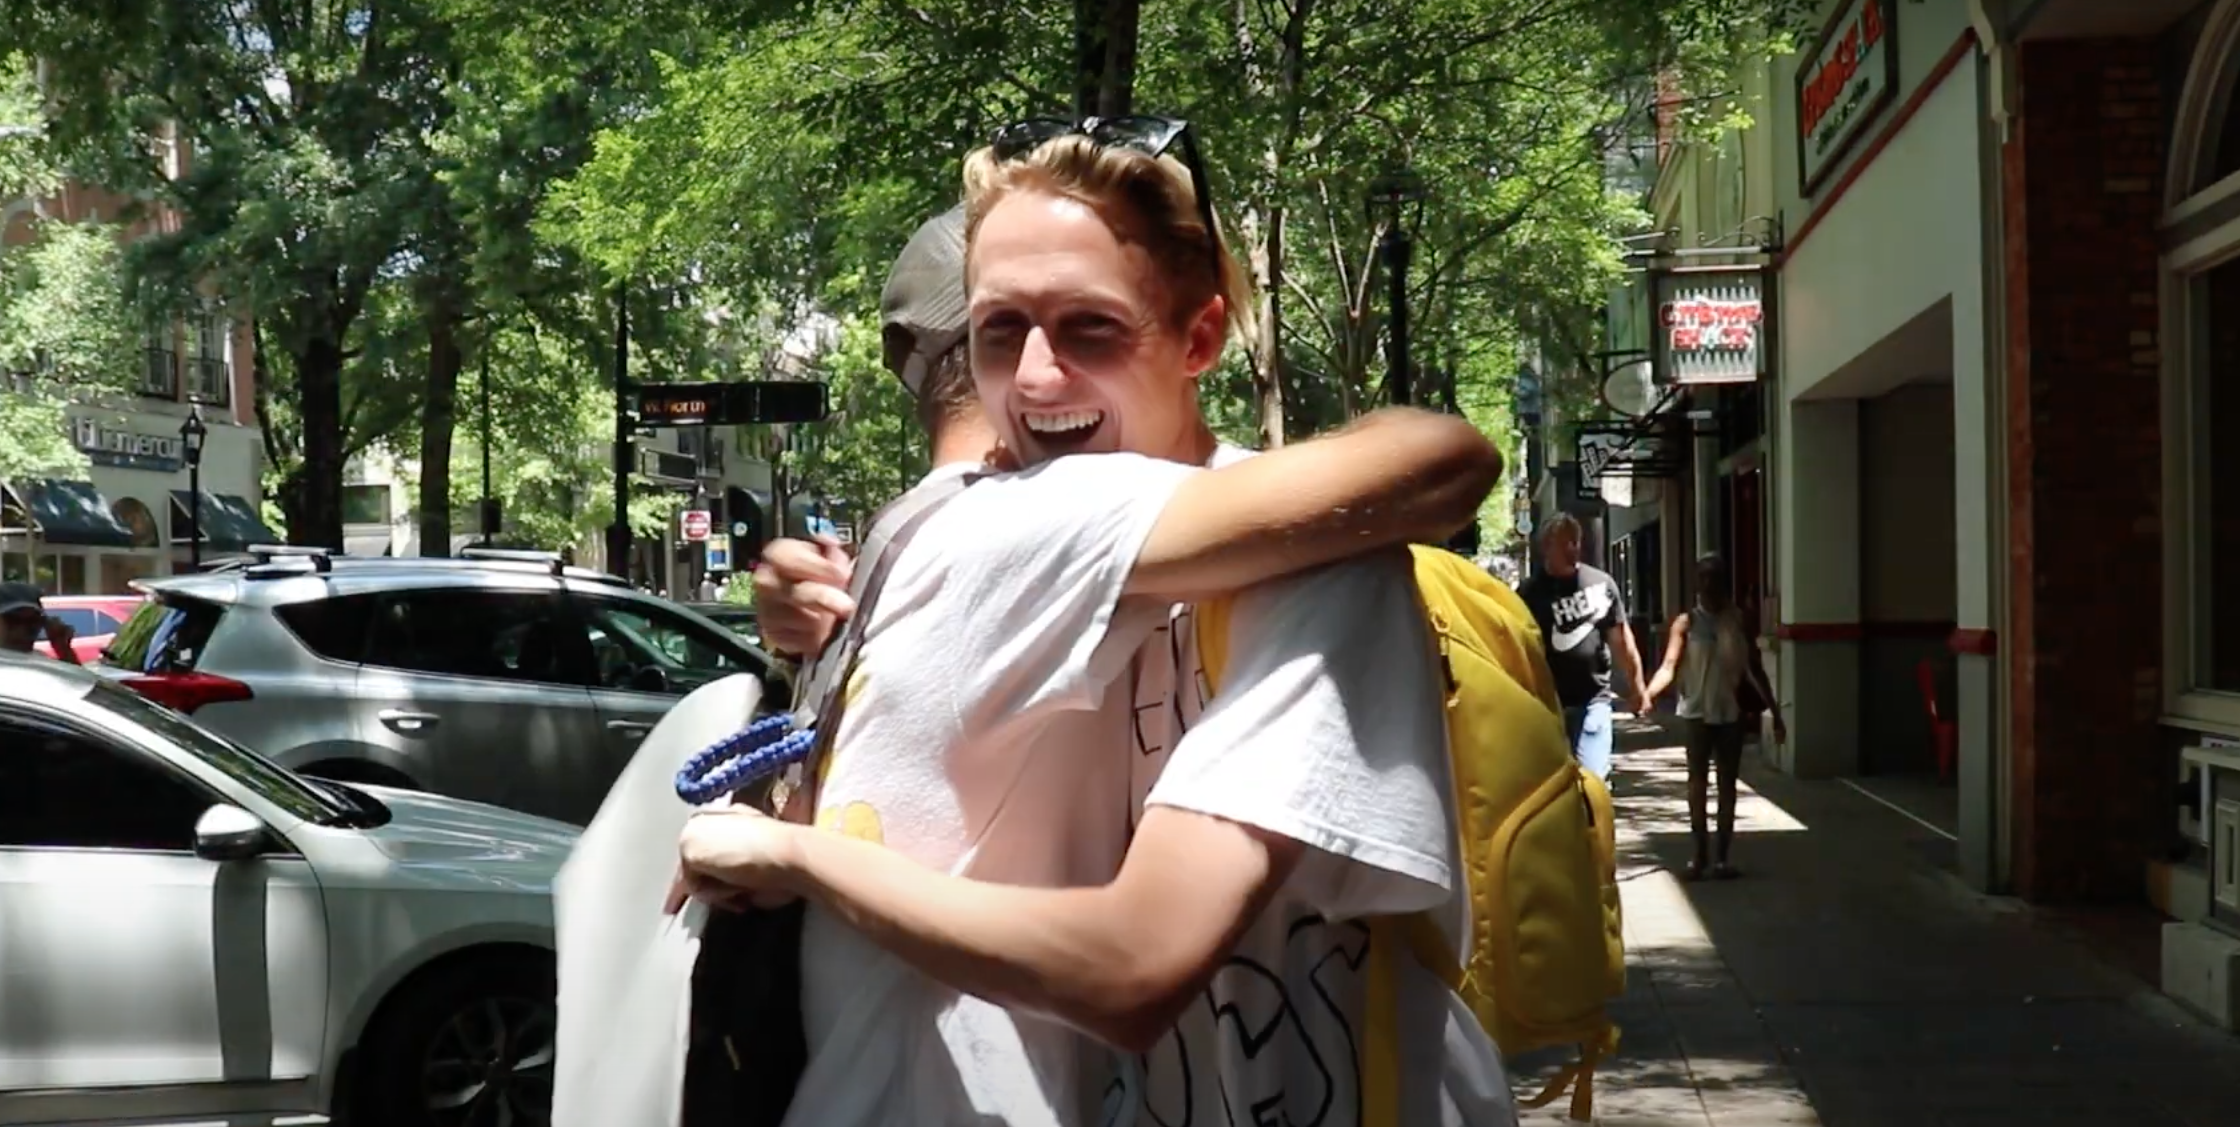 zach mcintyre hugging a stranger in downtown greenville